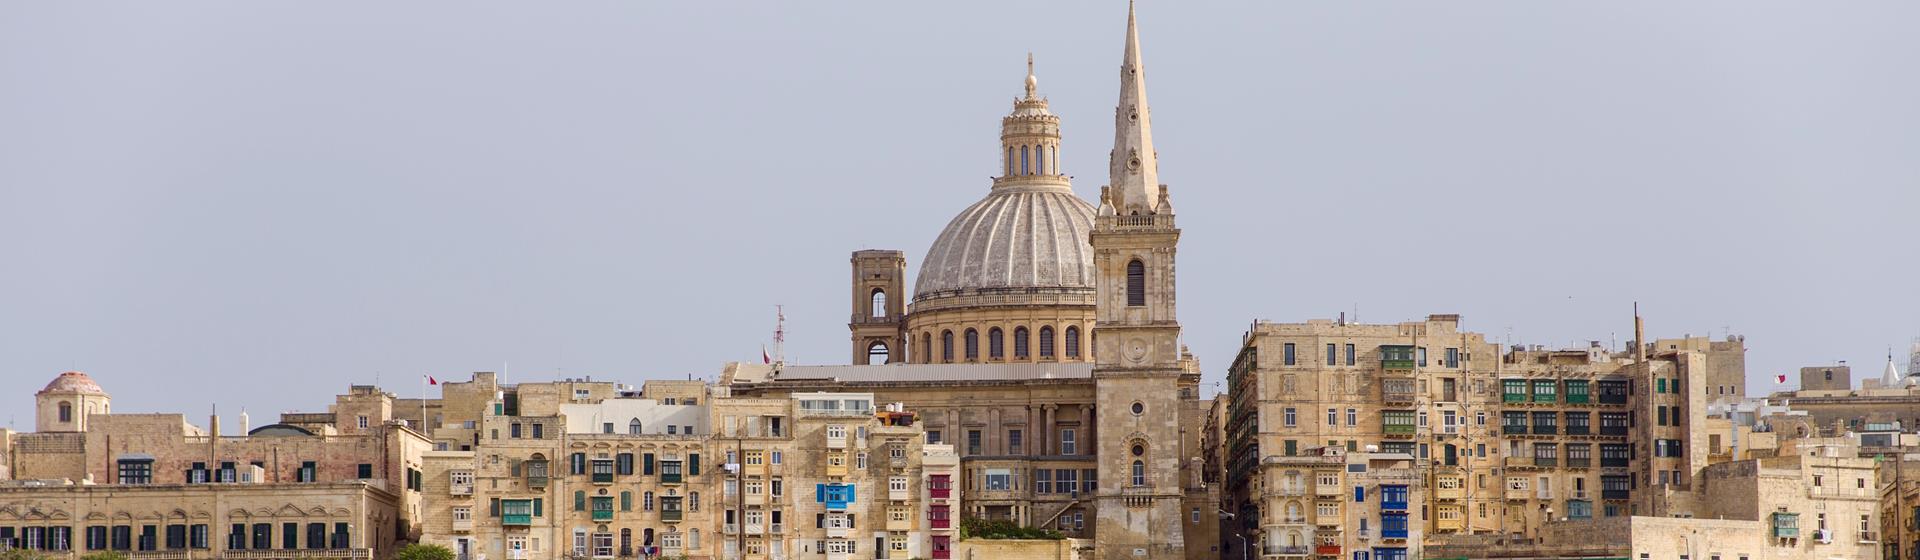 Holidays & City Breaks to Valletta